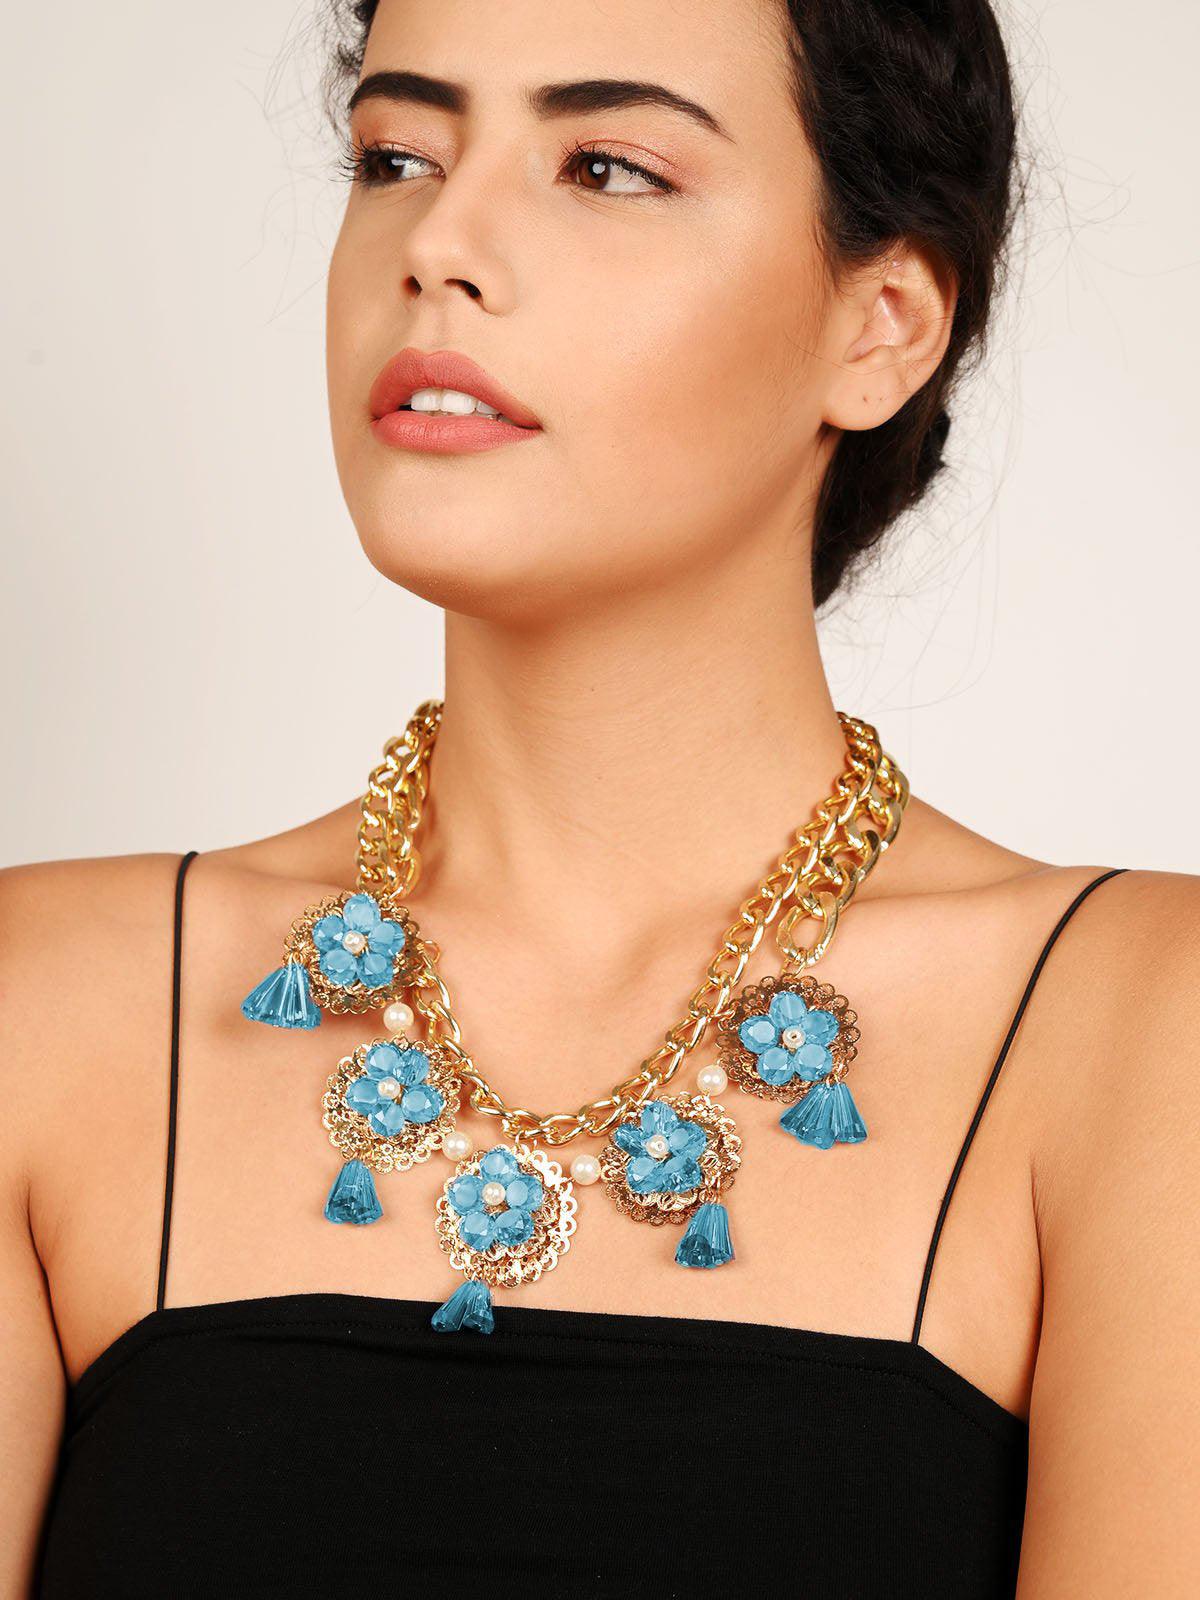 Turquoise Stone statement necklace, Soutache necklace, Blue - Inspire Uplift